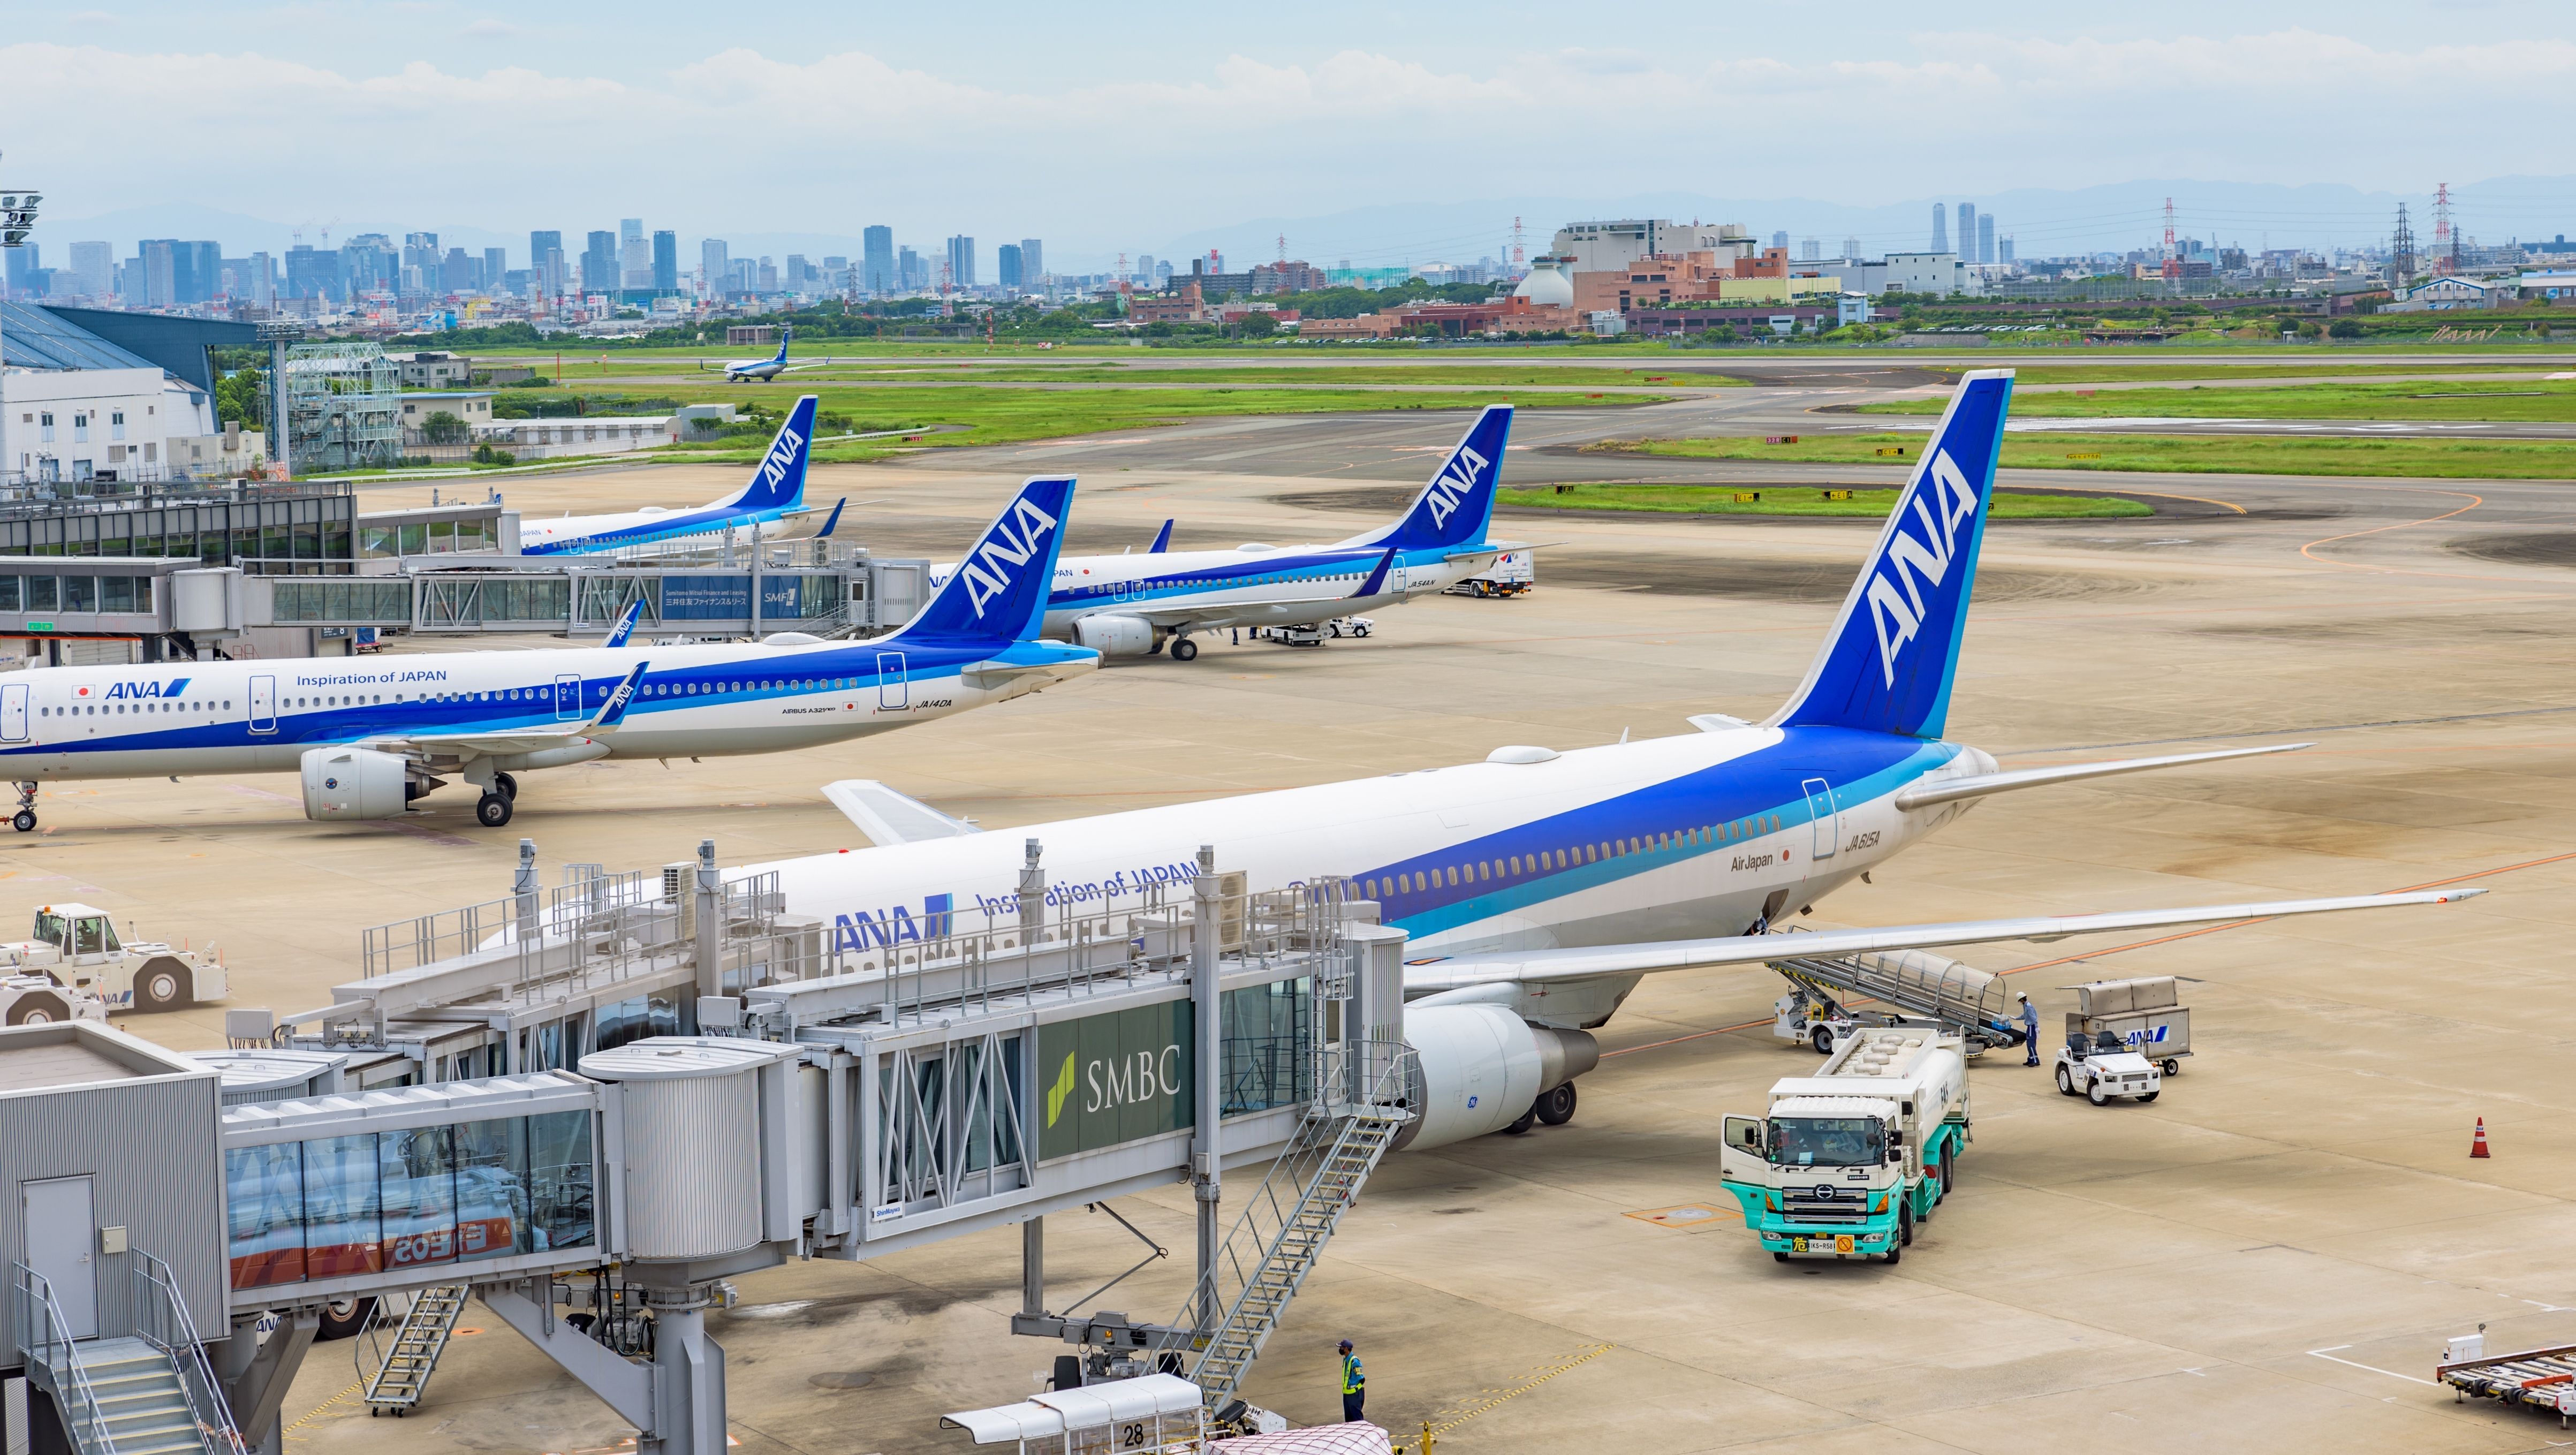 Several ANA aircraft parked on the apron at Itami Airport in Osaka.